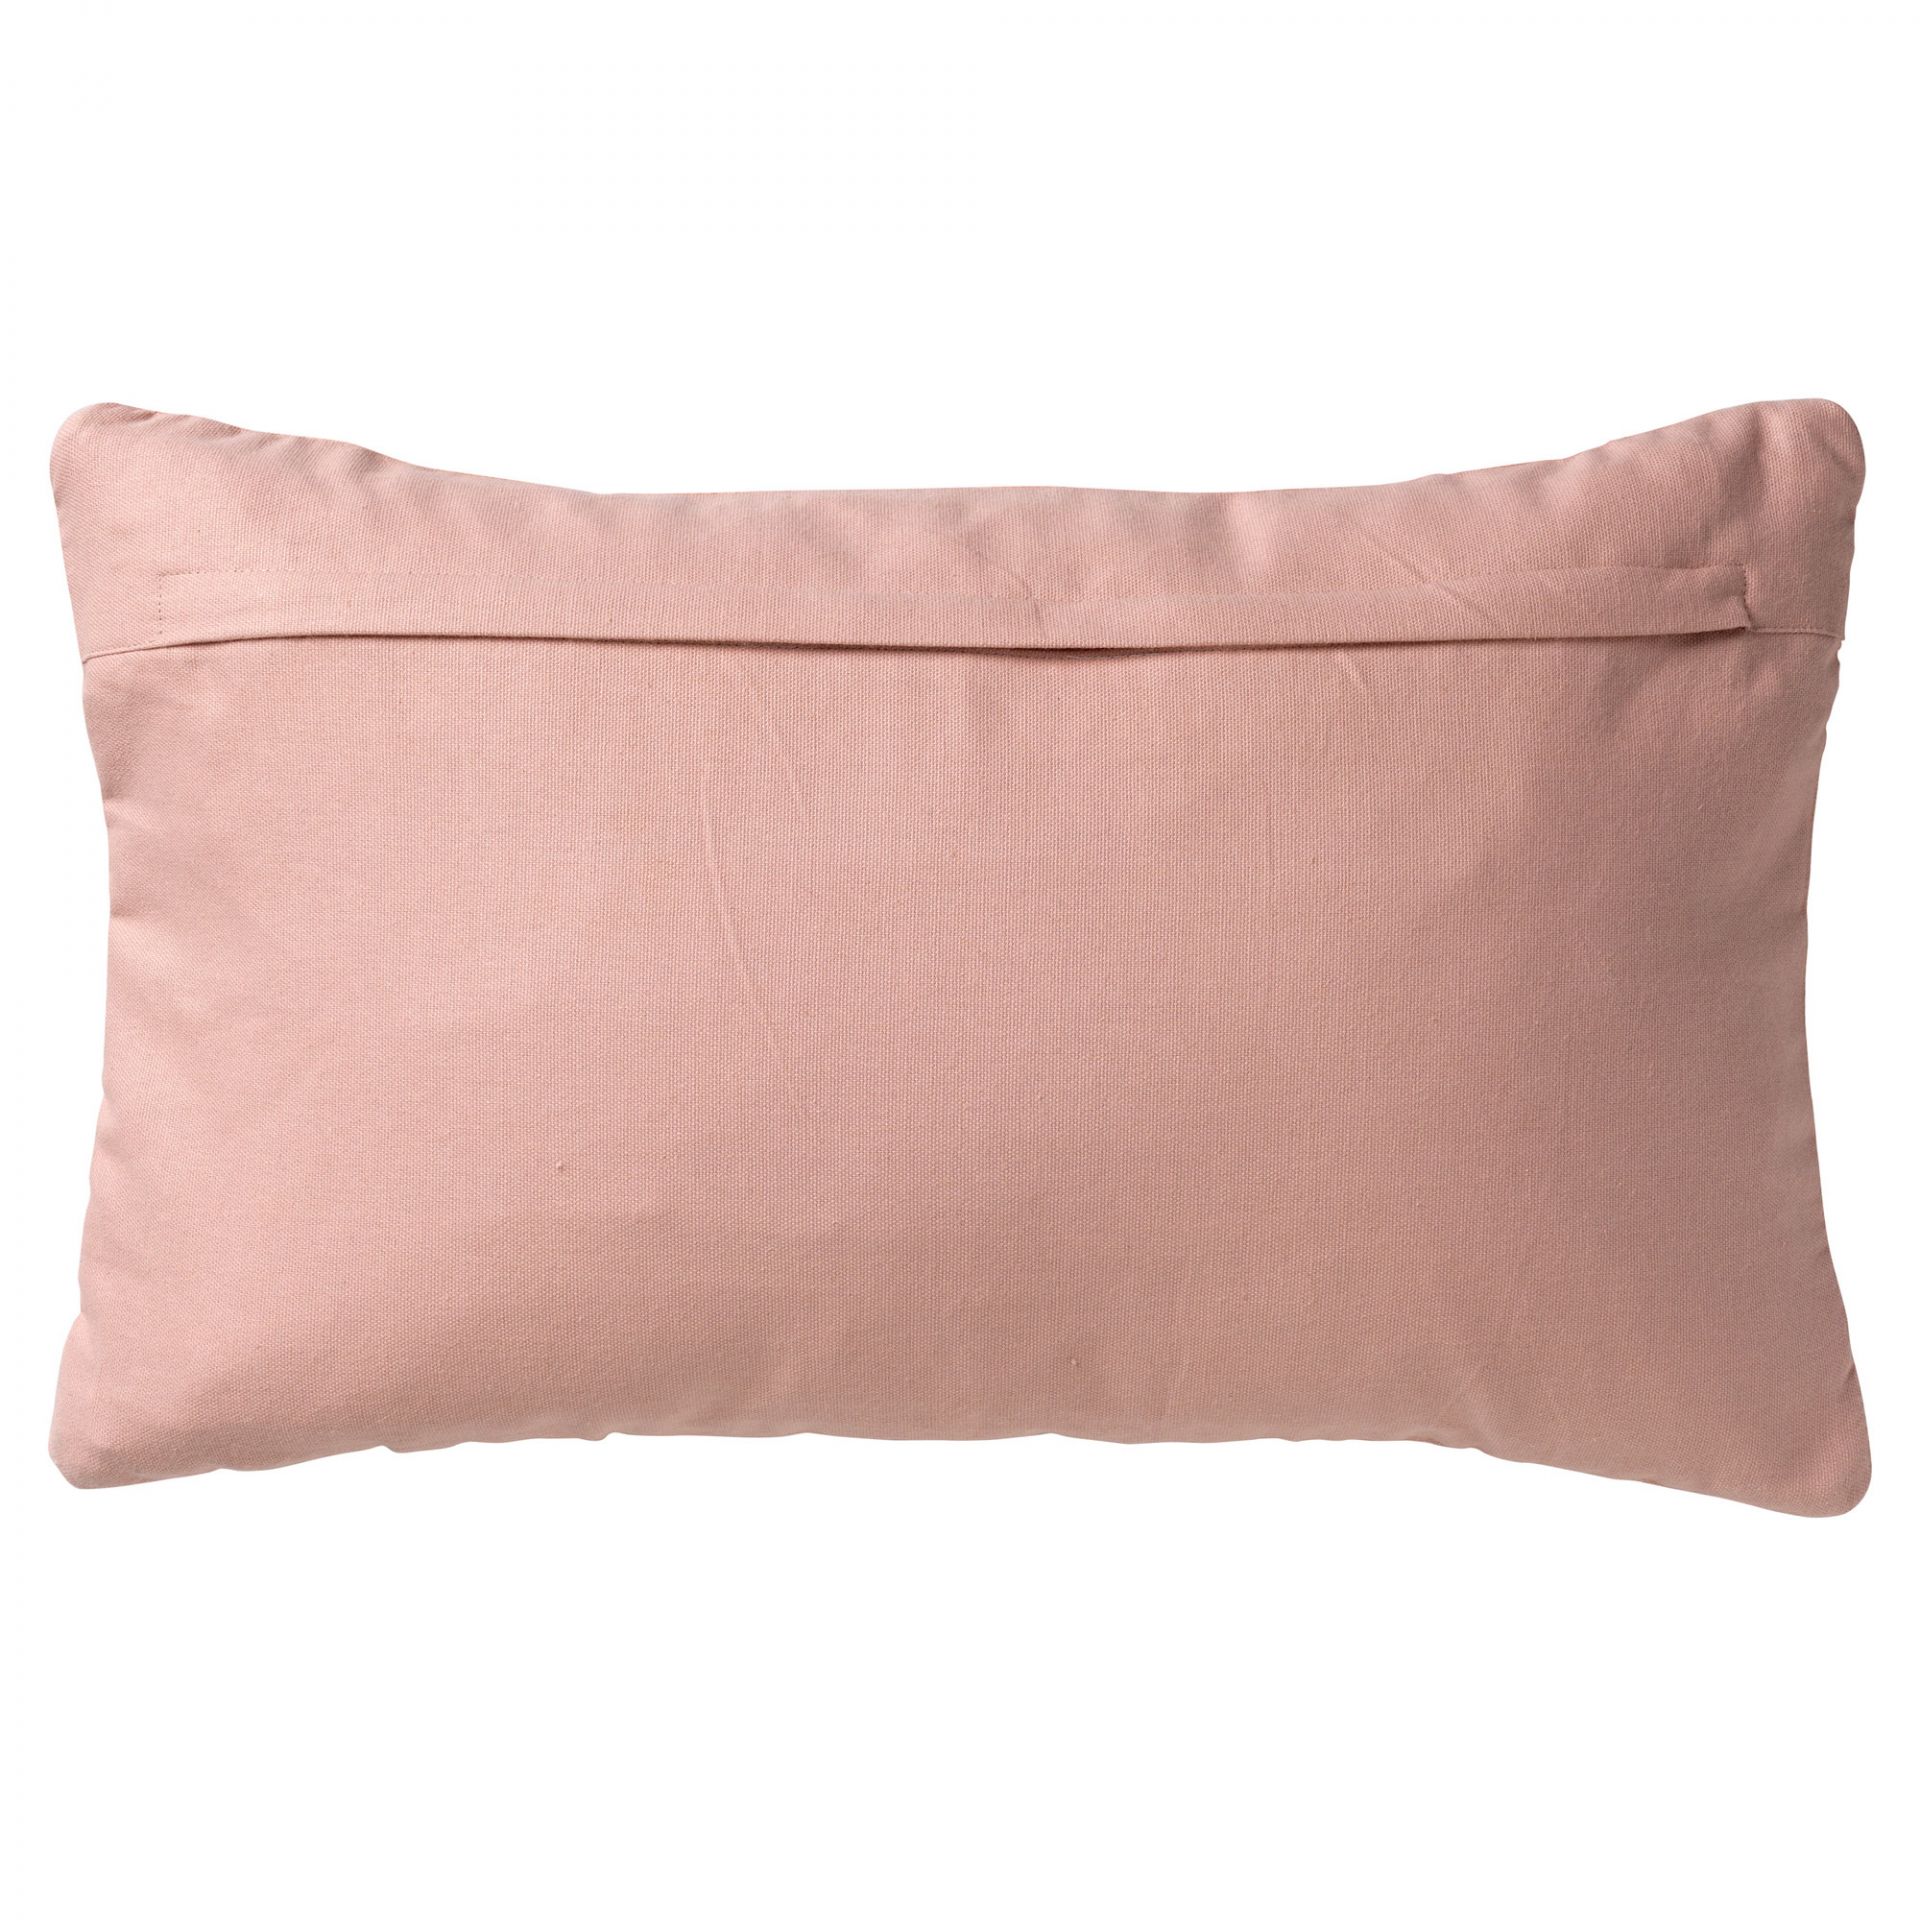 FEMM - Kussenhoes velvet 30x50 cm - Muted Clay - roze